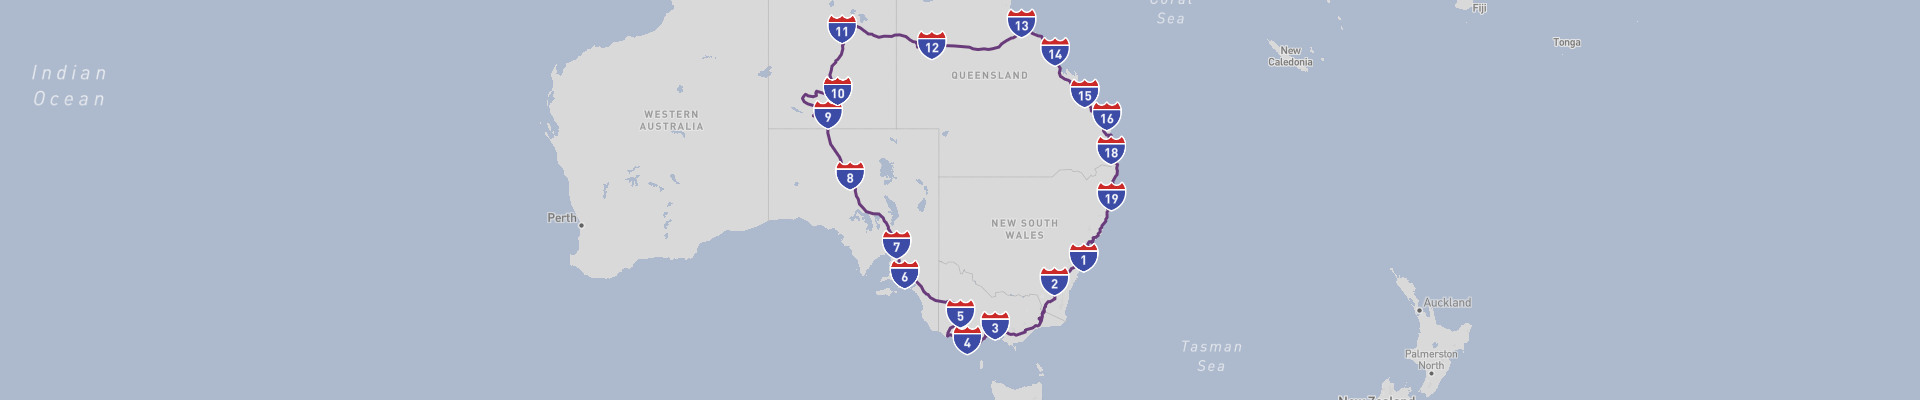 Itinéraire Eastern Australia 